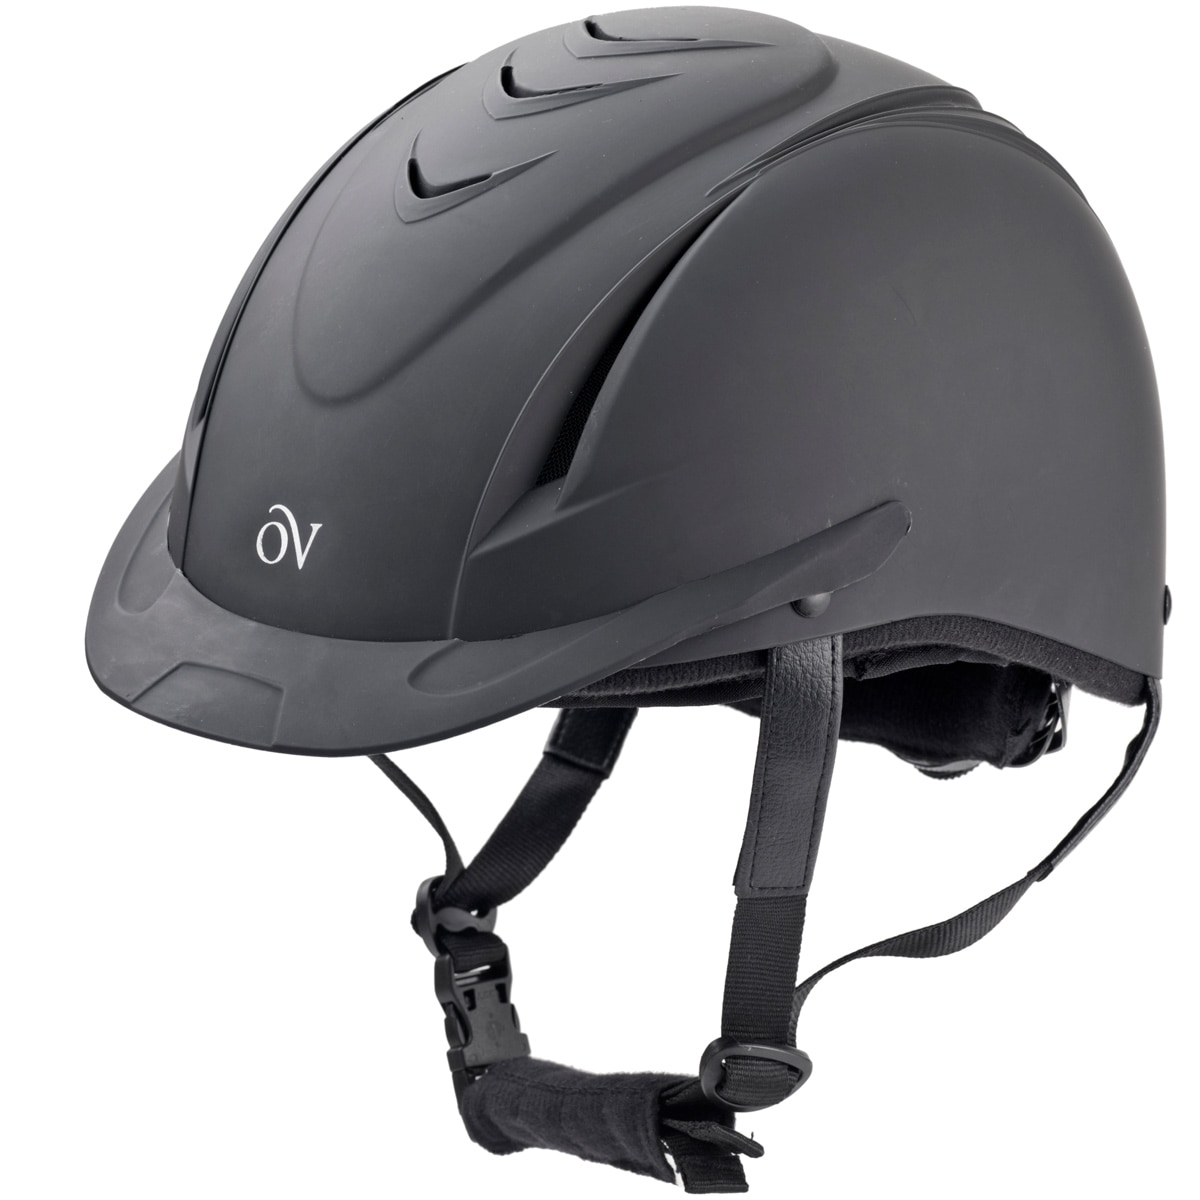 Ovation Competitor Helmet ENGLISH RIDING SUPPLY